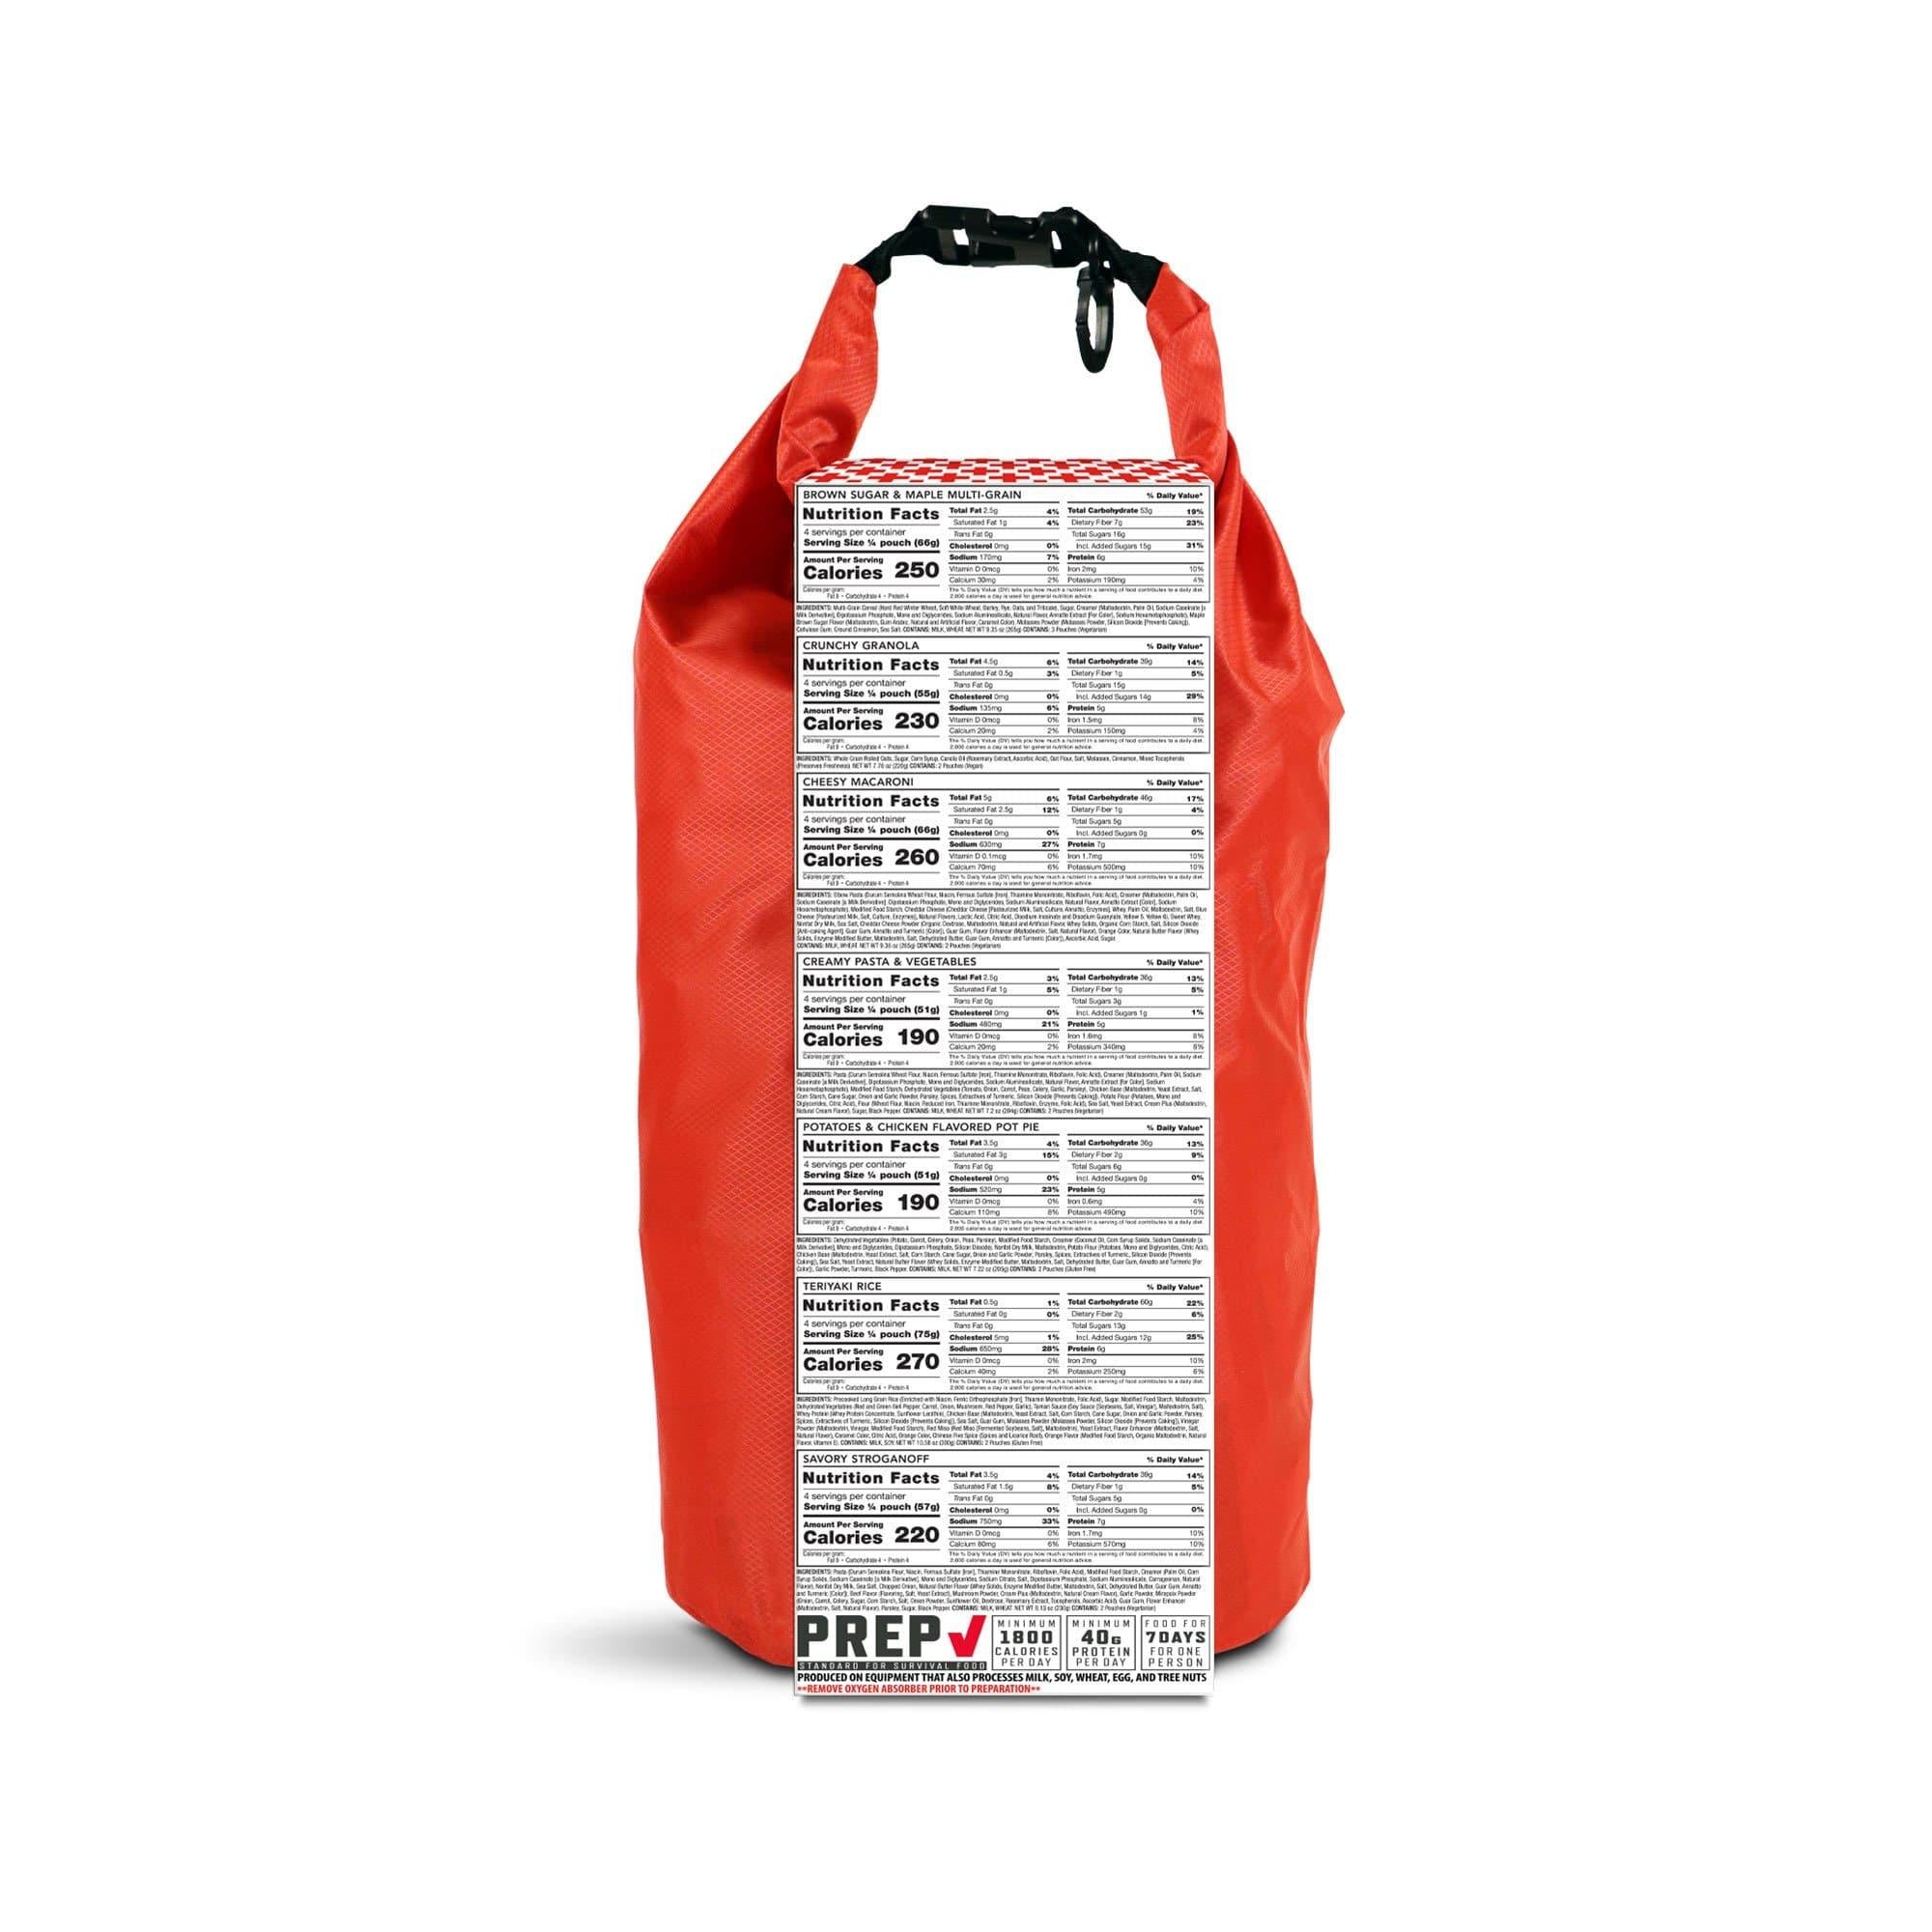 Buy 1, Get 1 Free - American Red Cross 7 Day (60 Servings) Emergency Food with Dry Bag